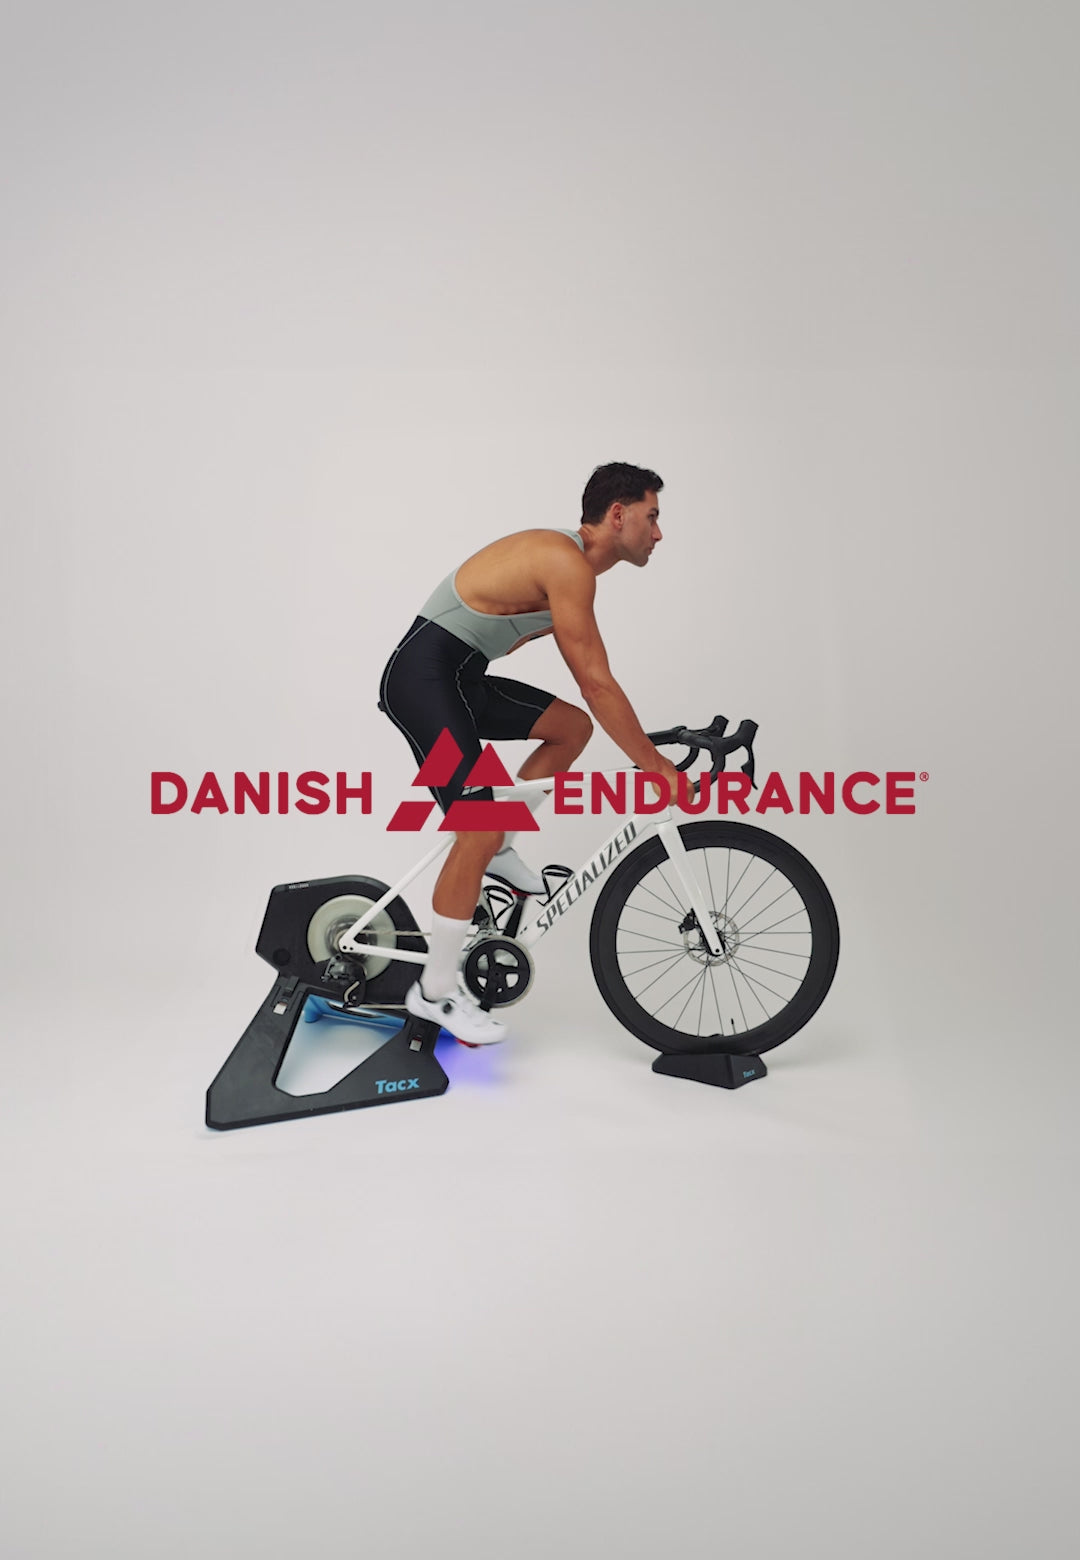 PANTS ENDURANCE – BIB FOR CYCLING MEN DANISH